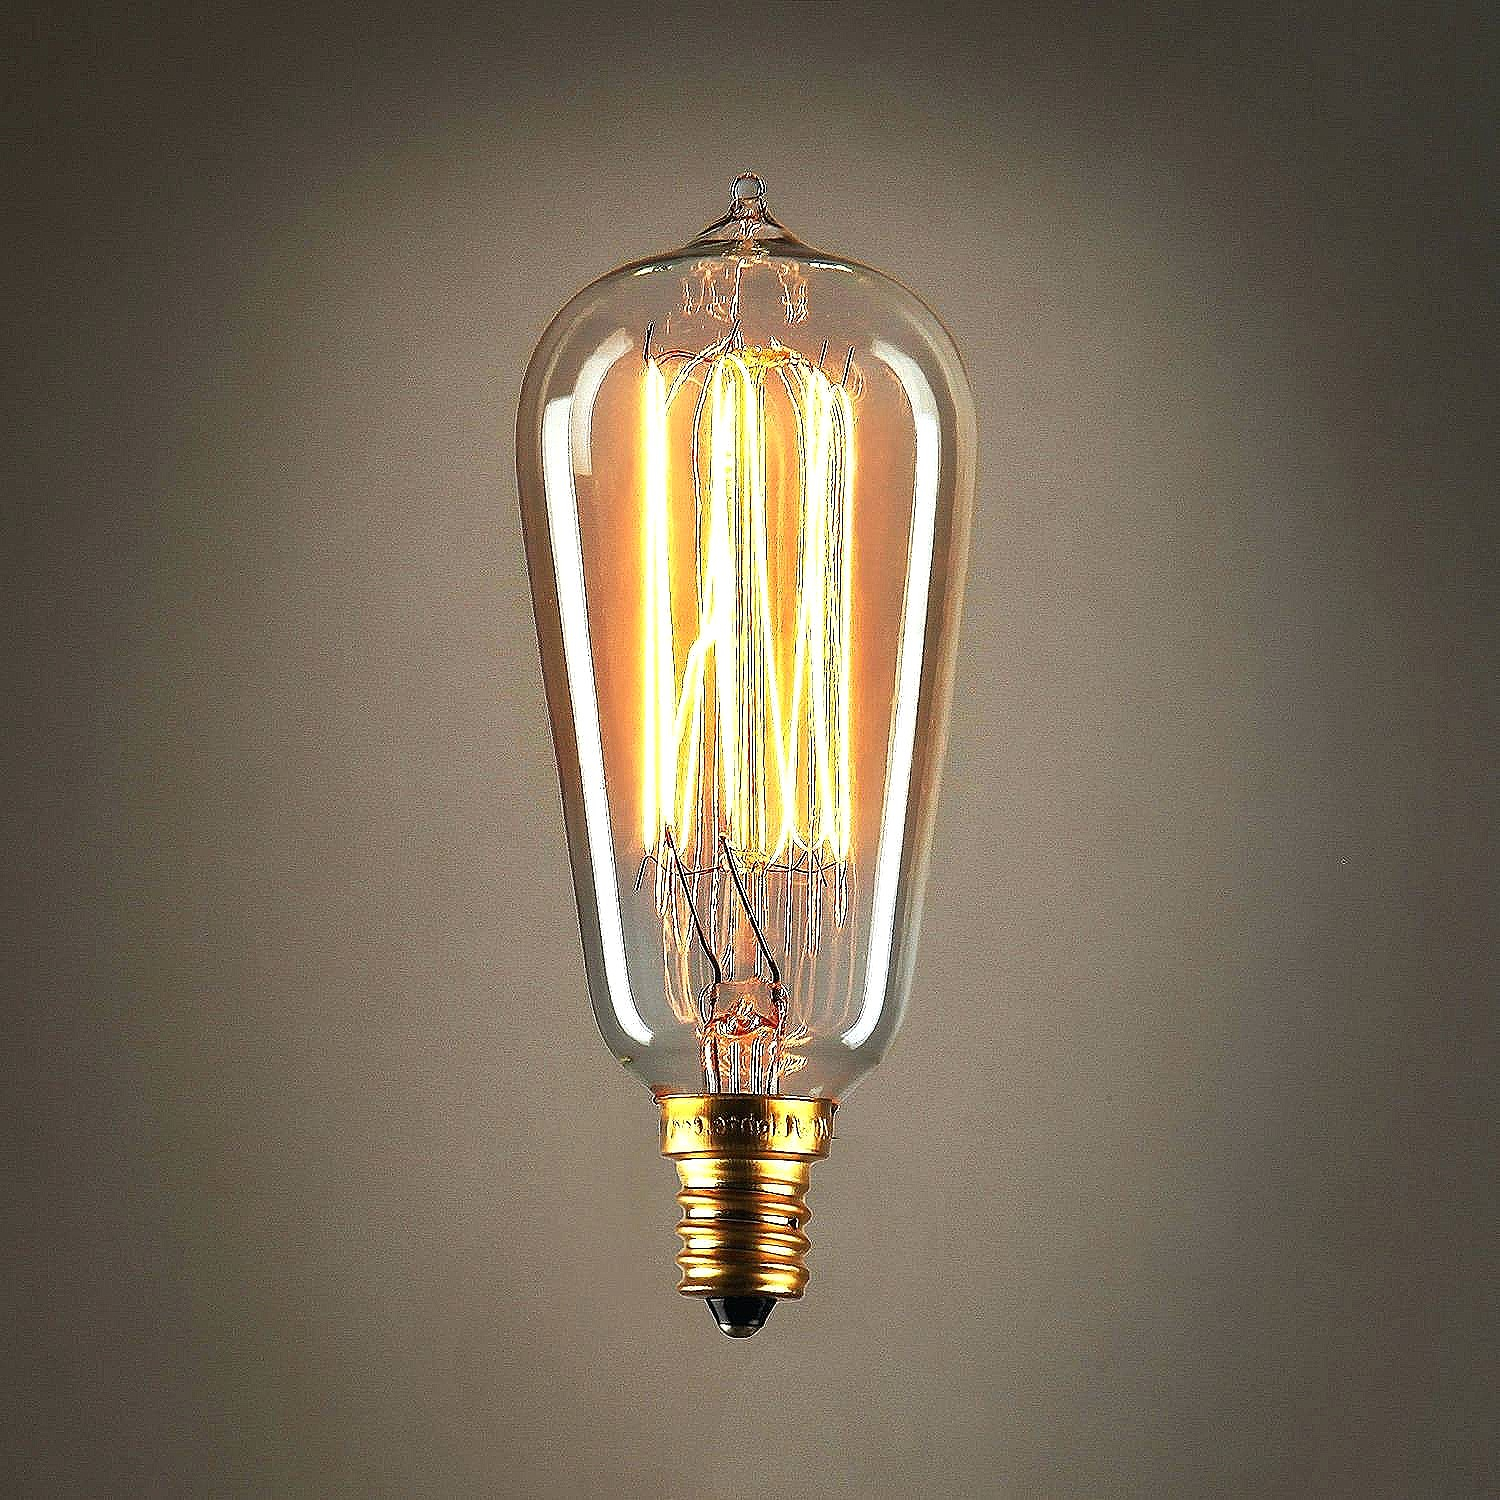 Inspirational Decorative Light Bulbs 9 Photos 100topwetlandsites inside measurements 1500 X 1500